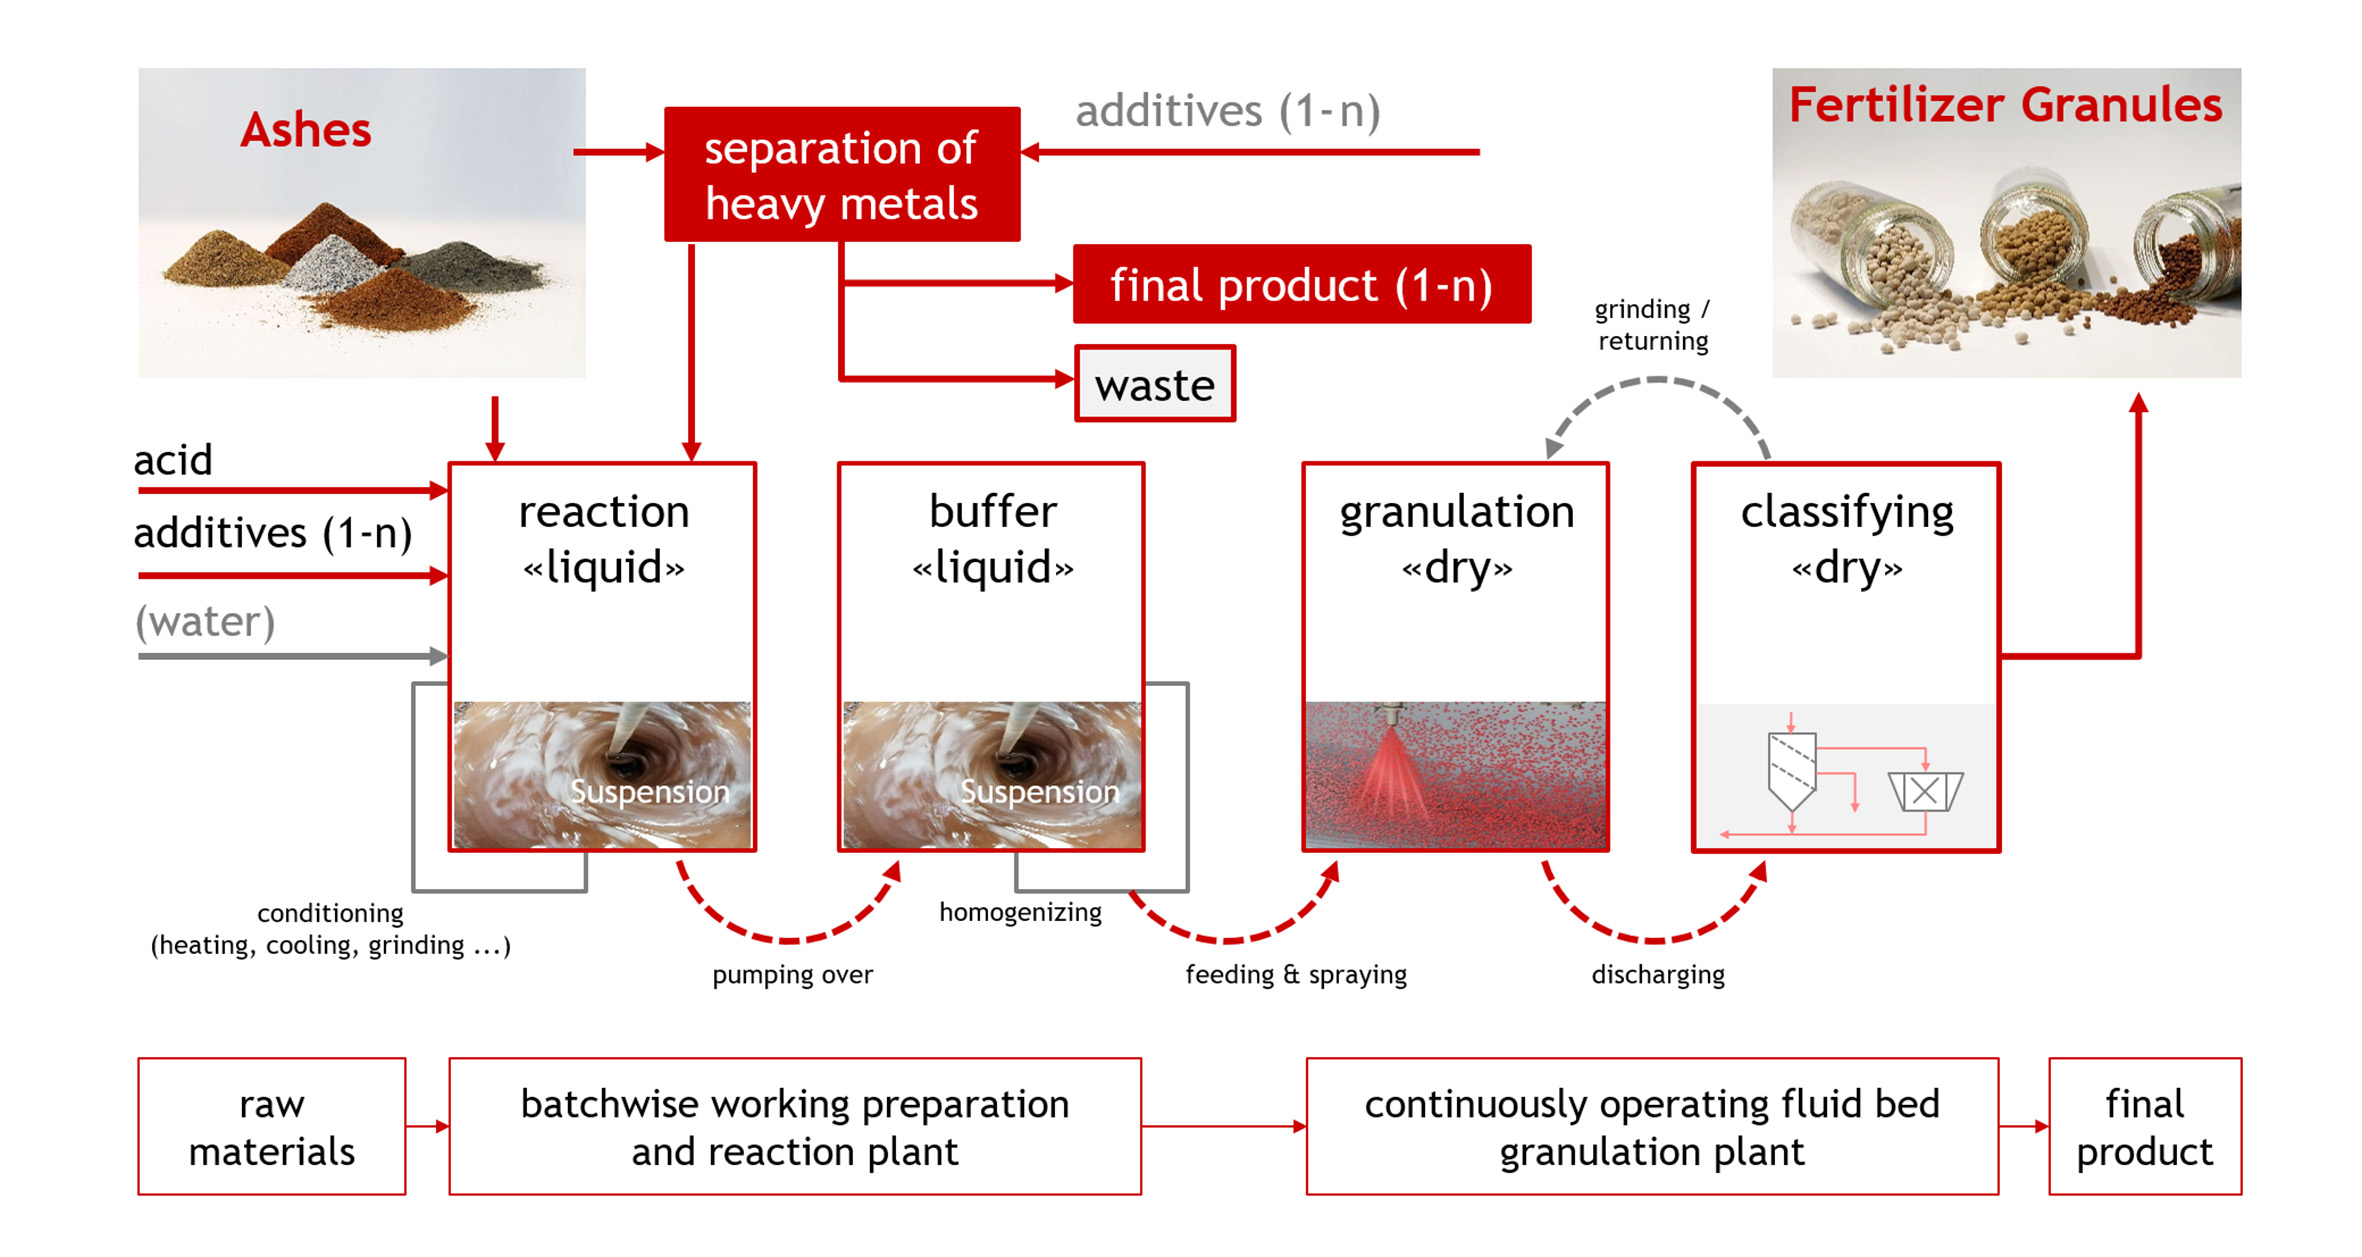 Glatt PHOS4green: principle of phosphorus recycling from ash and conversion into fertilizer granules